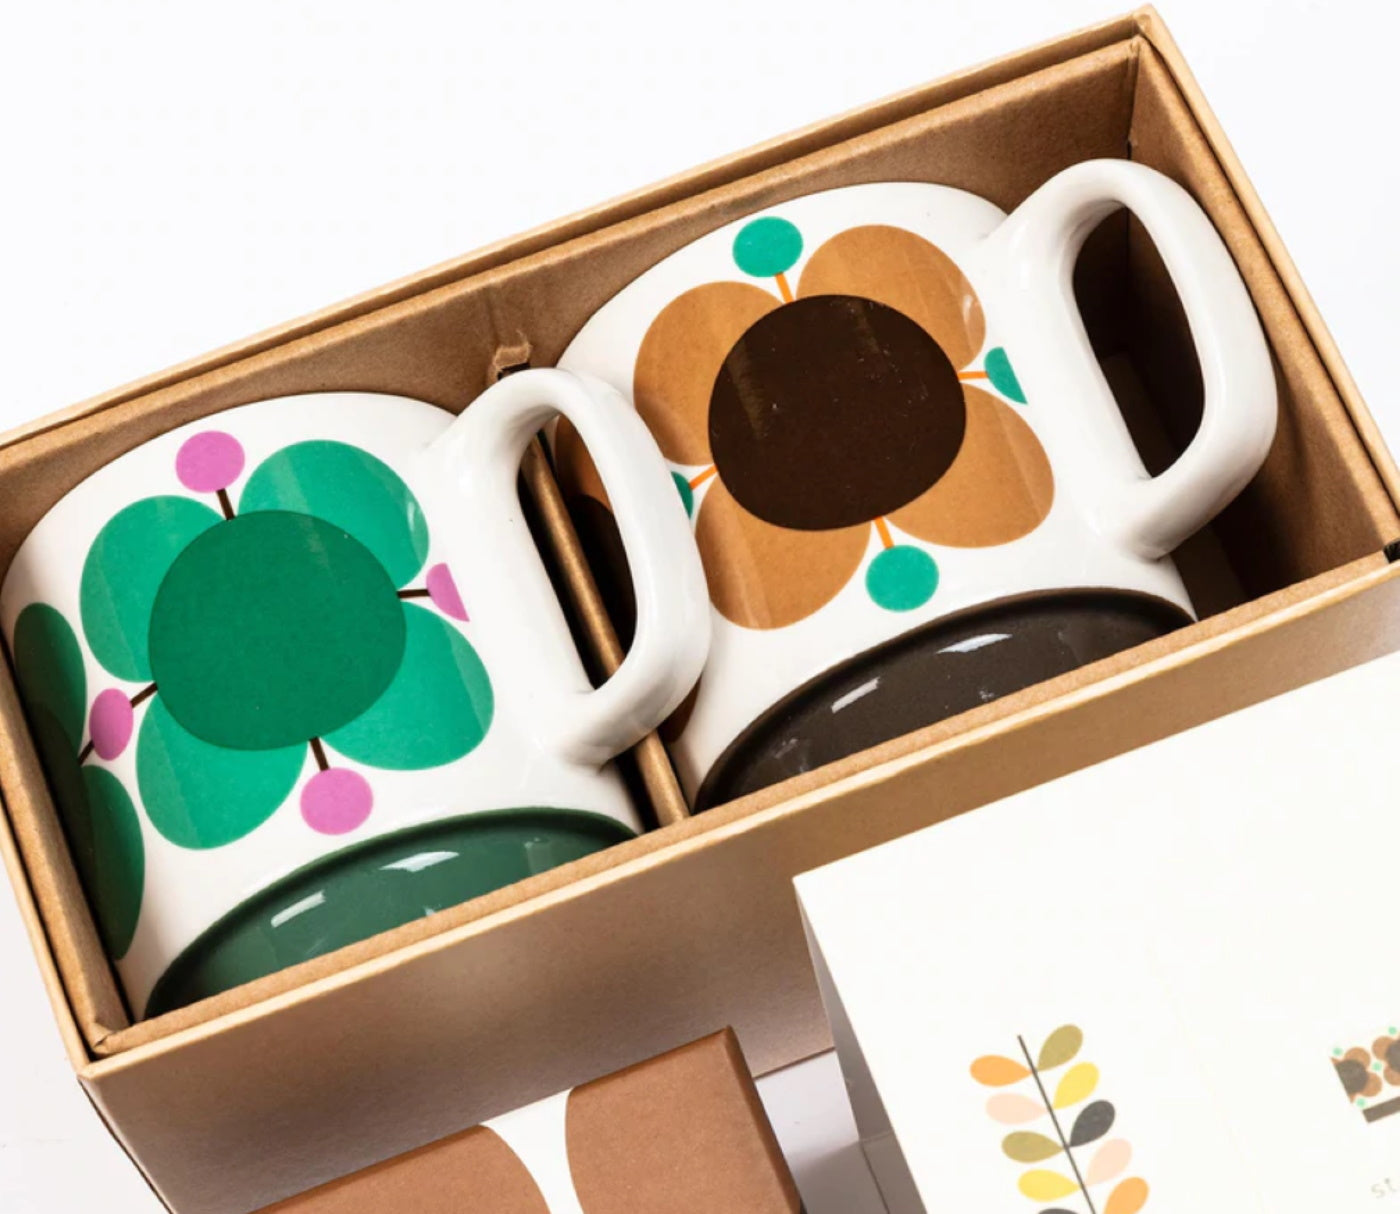 Orla Kiely Ceramic Mug Set - Jewel/Latte Atomic Flower with Matching Box